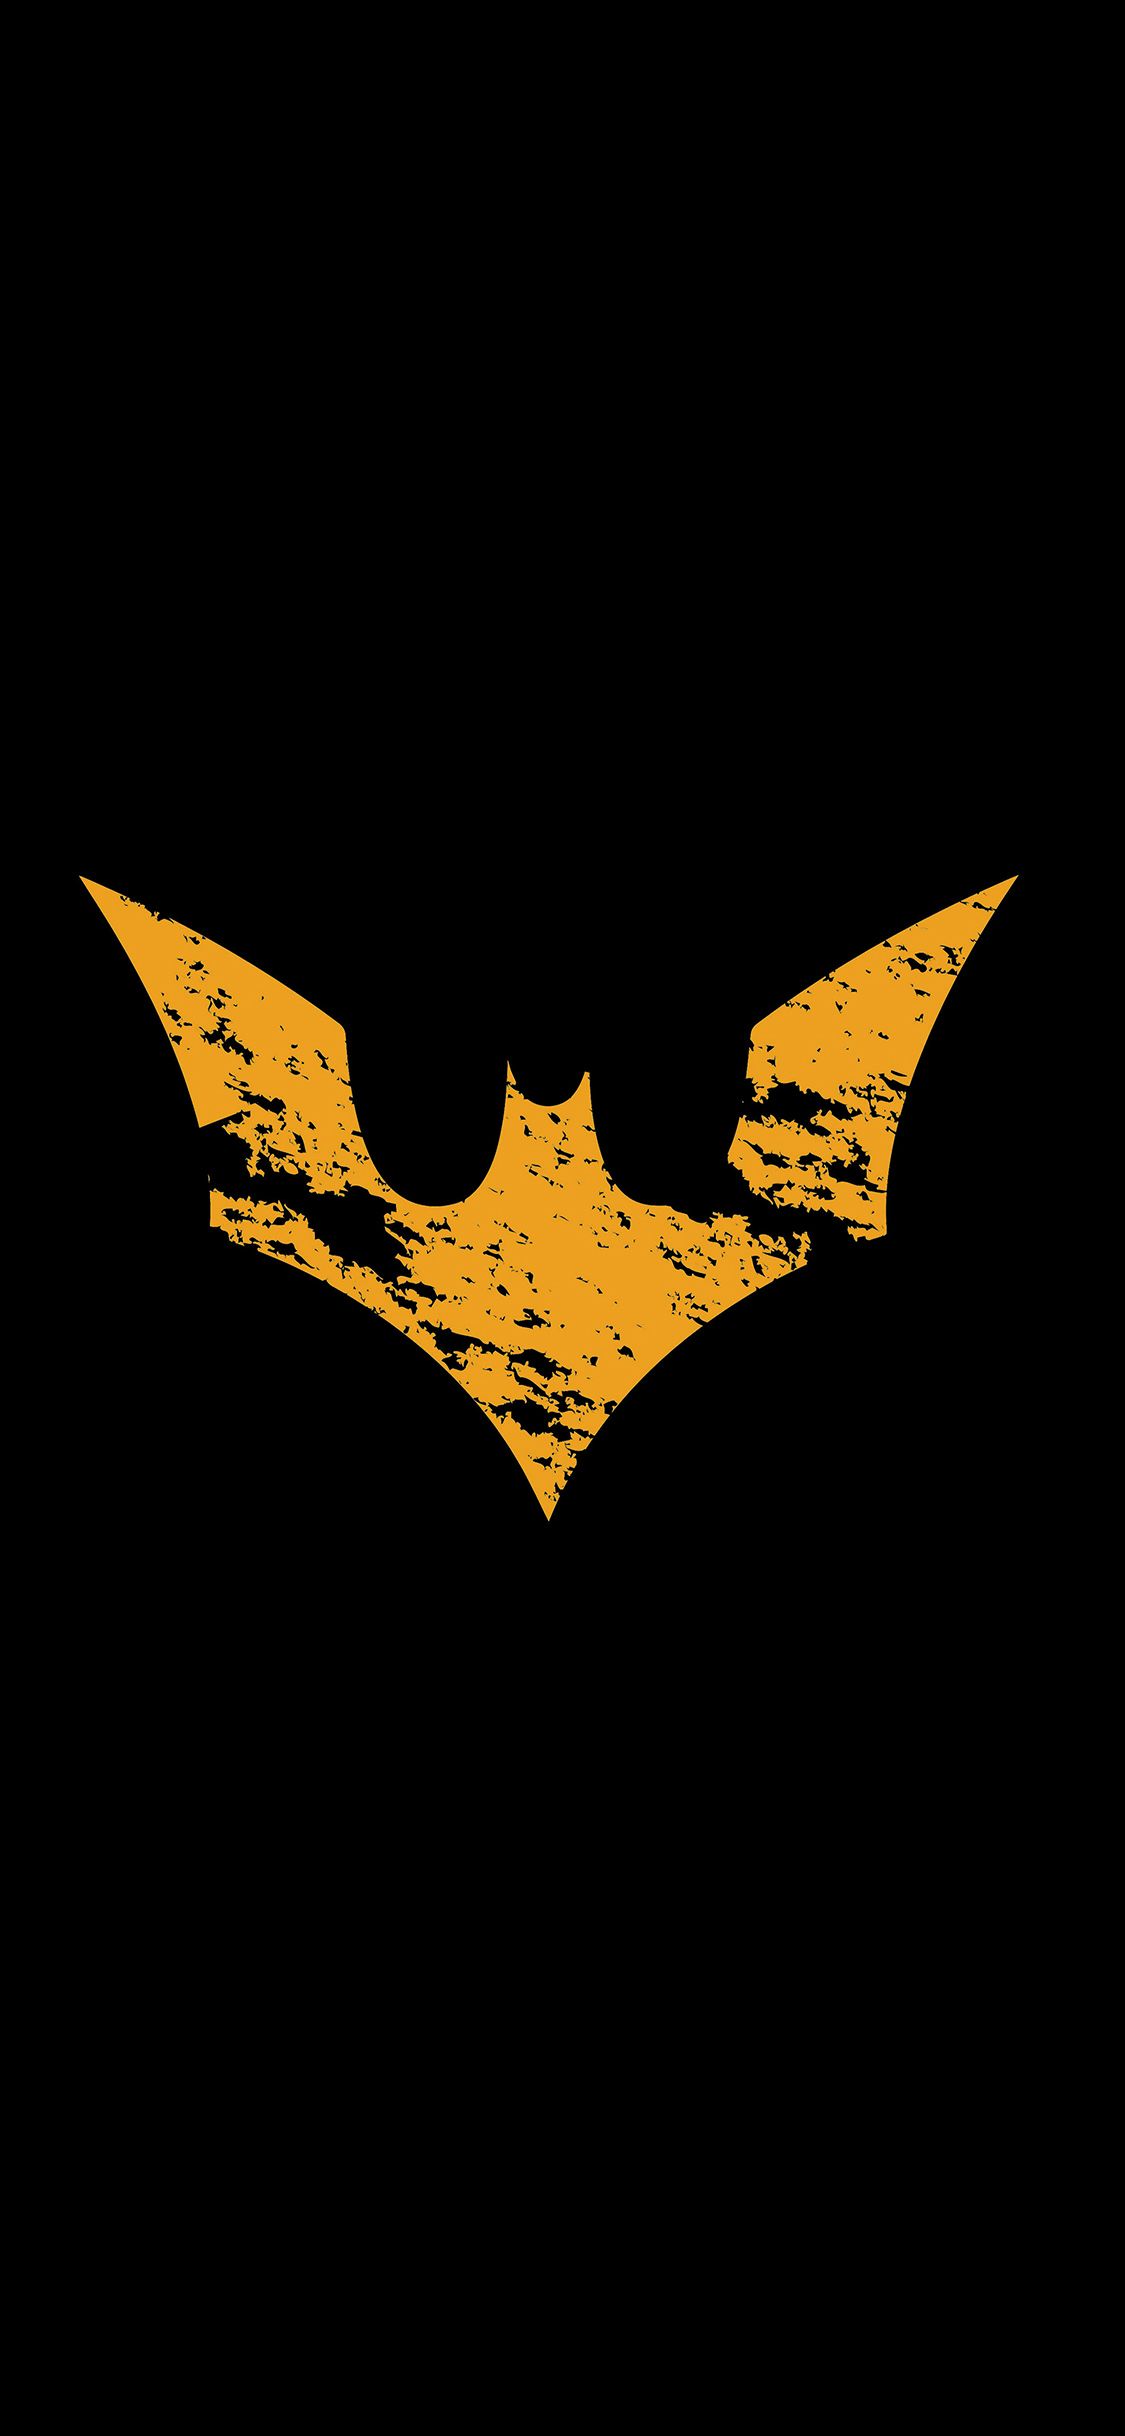 iPhone X wallpaper. batman logo yellow dark hero art